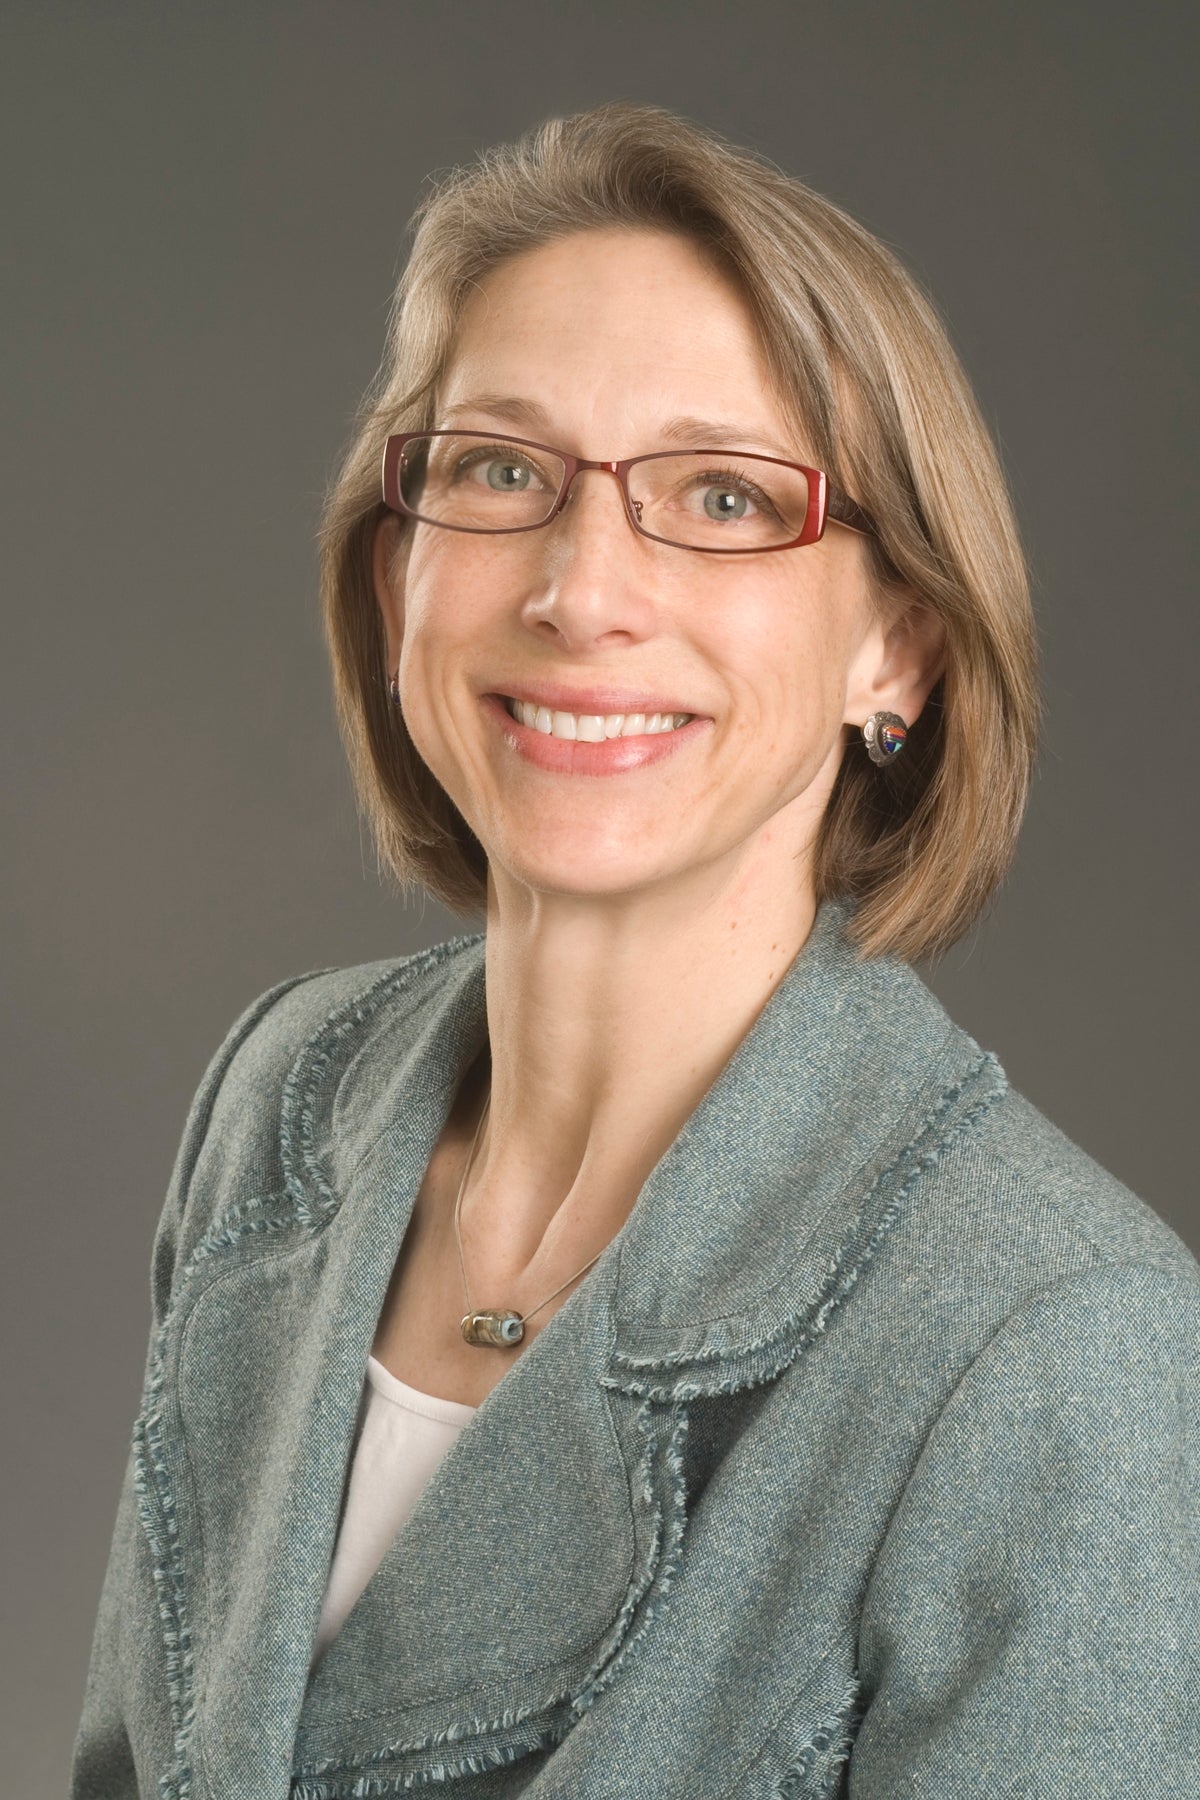 Kara Brascia, Director of Service Learning